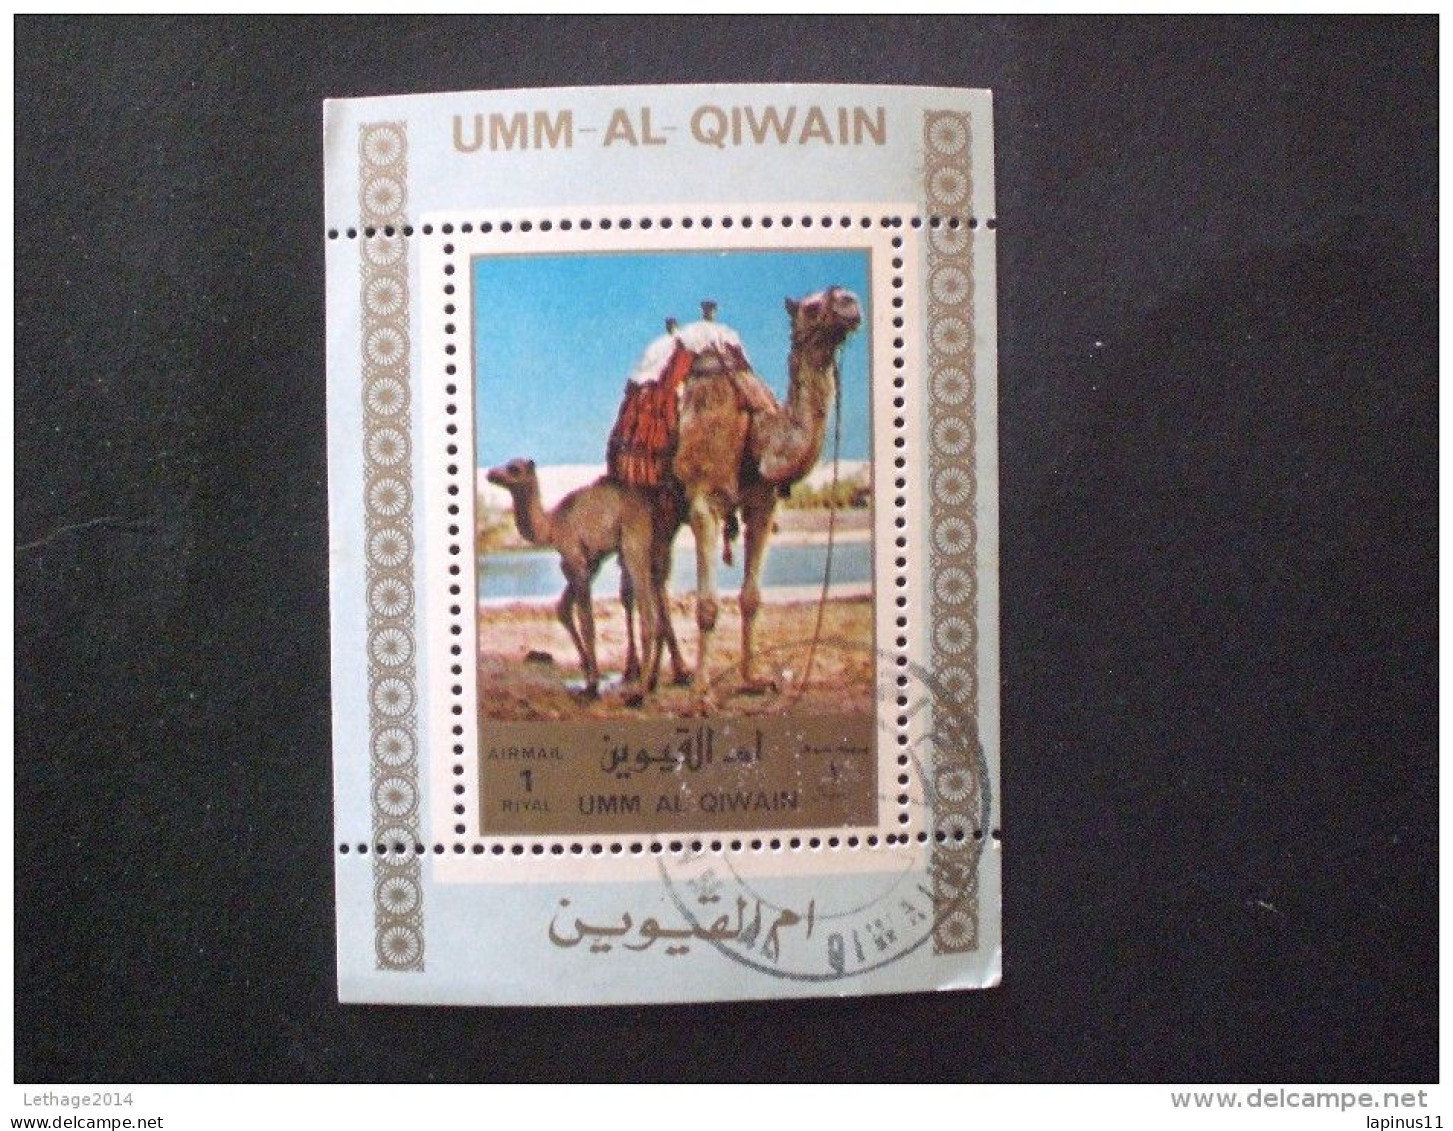 PRINTS ARAB EMIRATES UMM AL-QIWAN 1972 Airmail - Animals - Umm Al-Qiwain